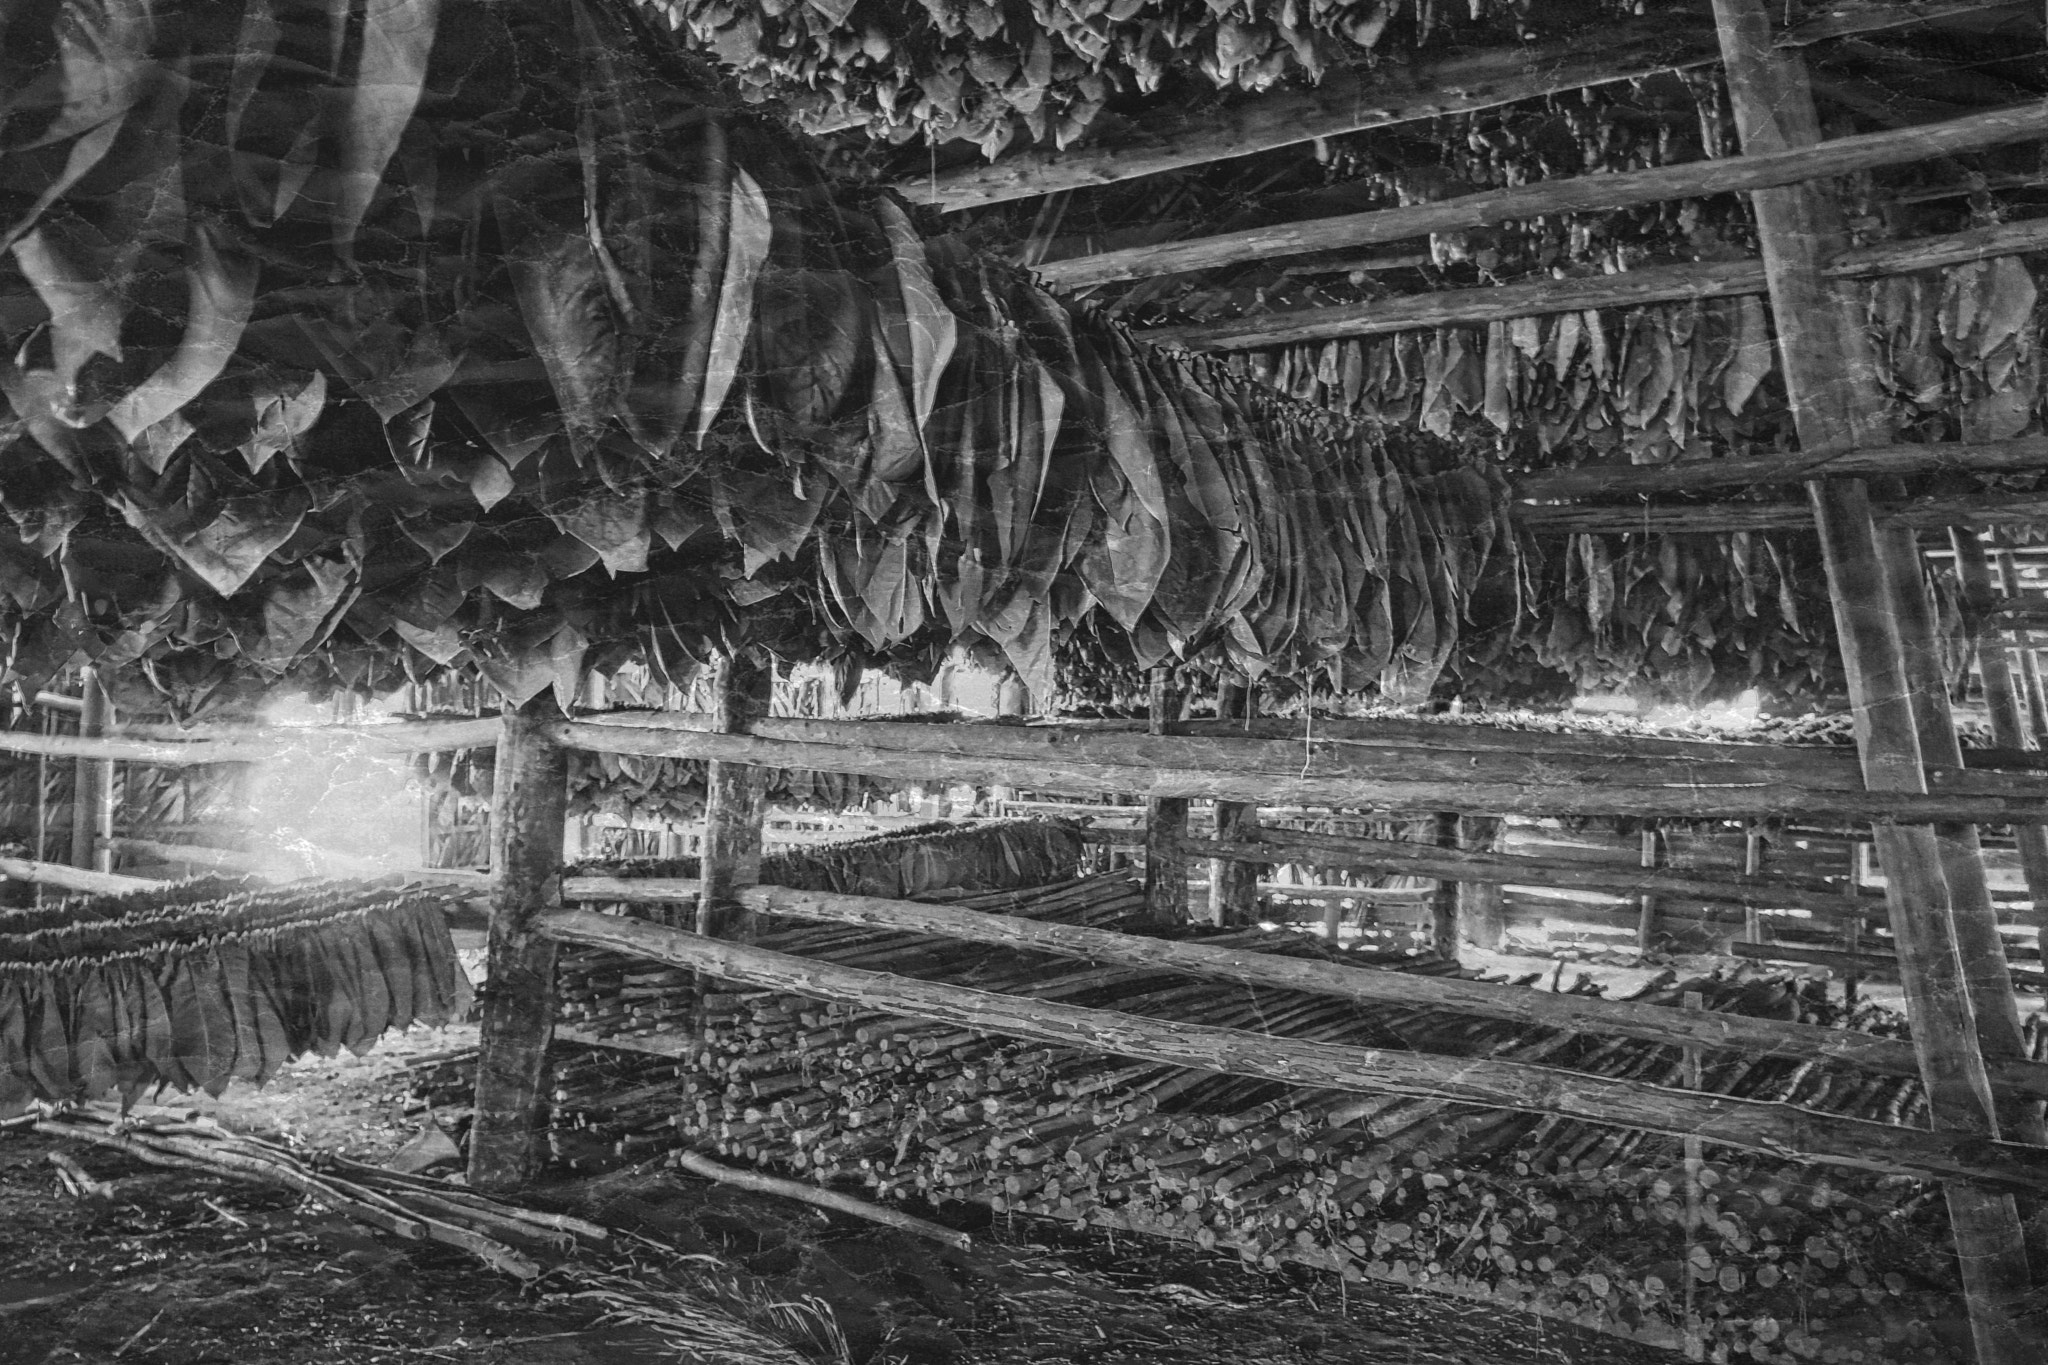 Hasselblad Lunar sample photo. Inside a cuban tobacco barn photography